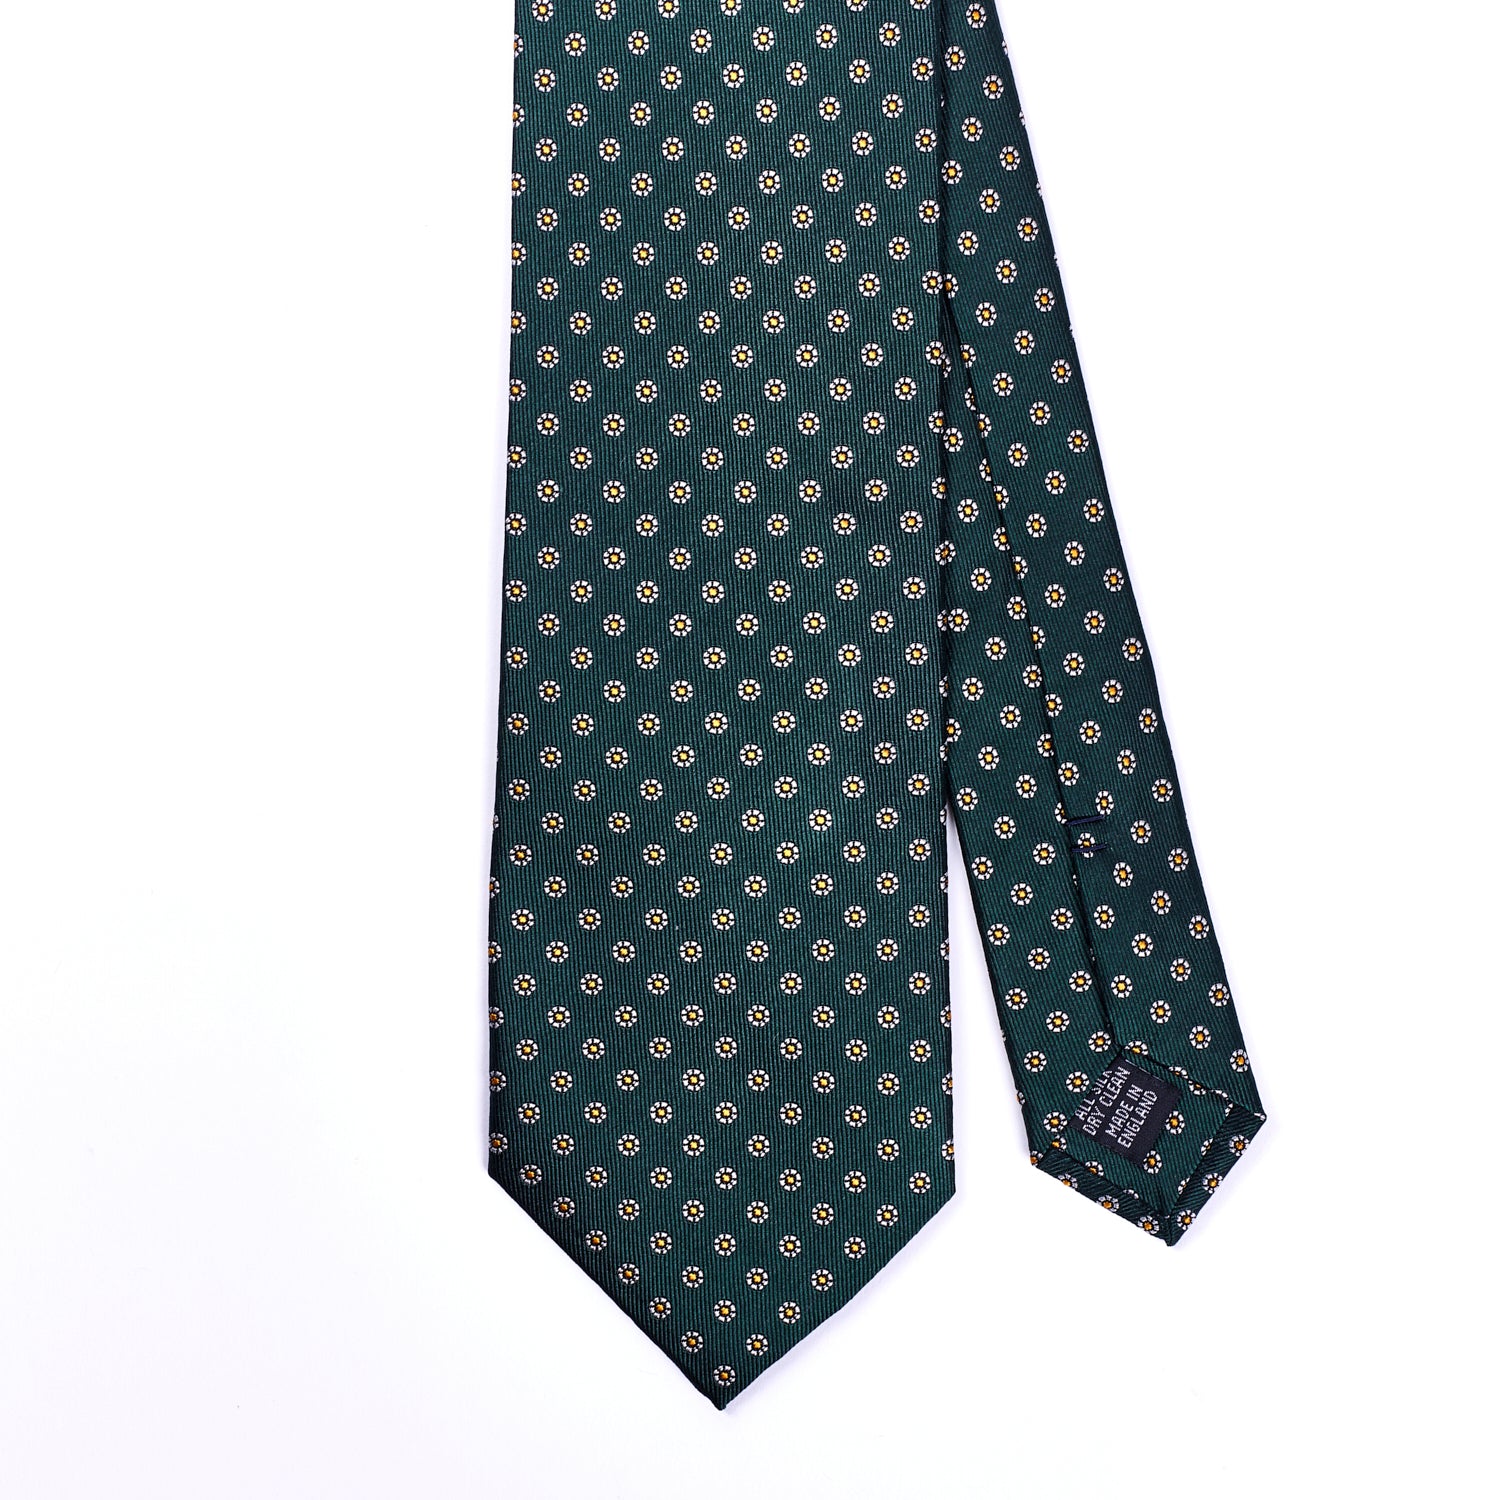 Sovereign Grade Hunter Green Floral Jacquard Tie, 150 cm | KirbyAllison.com